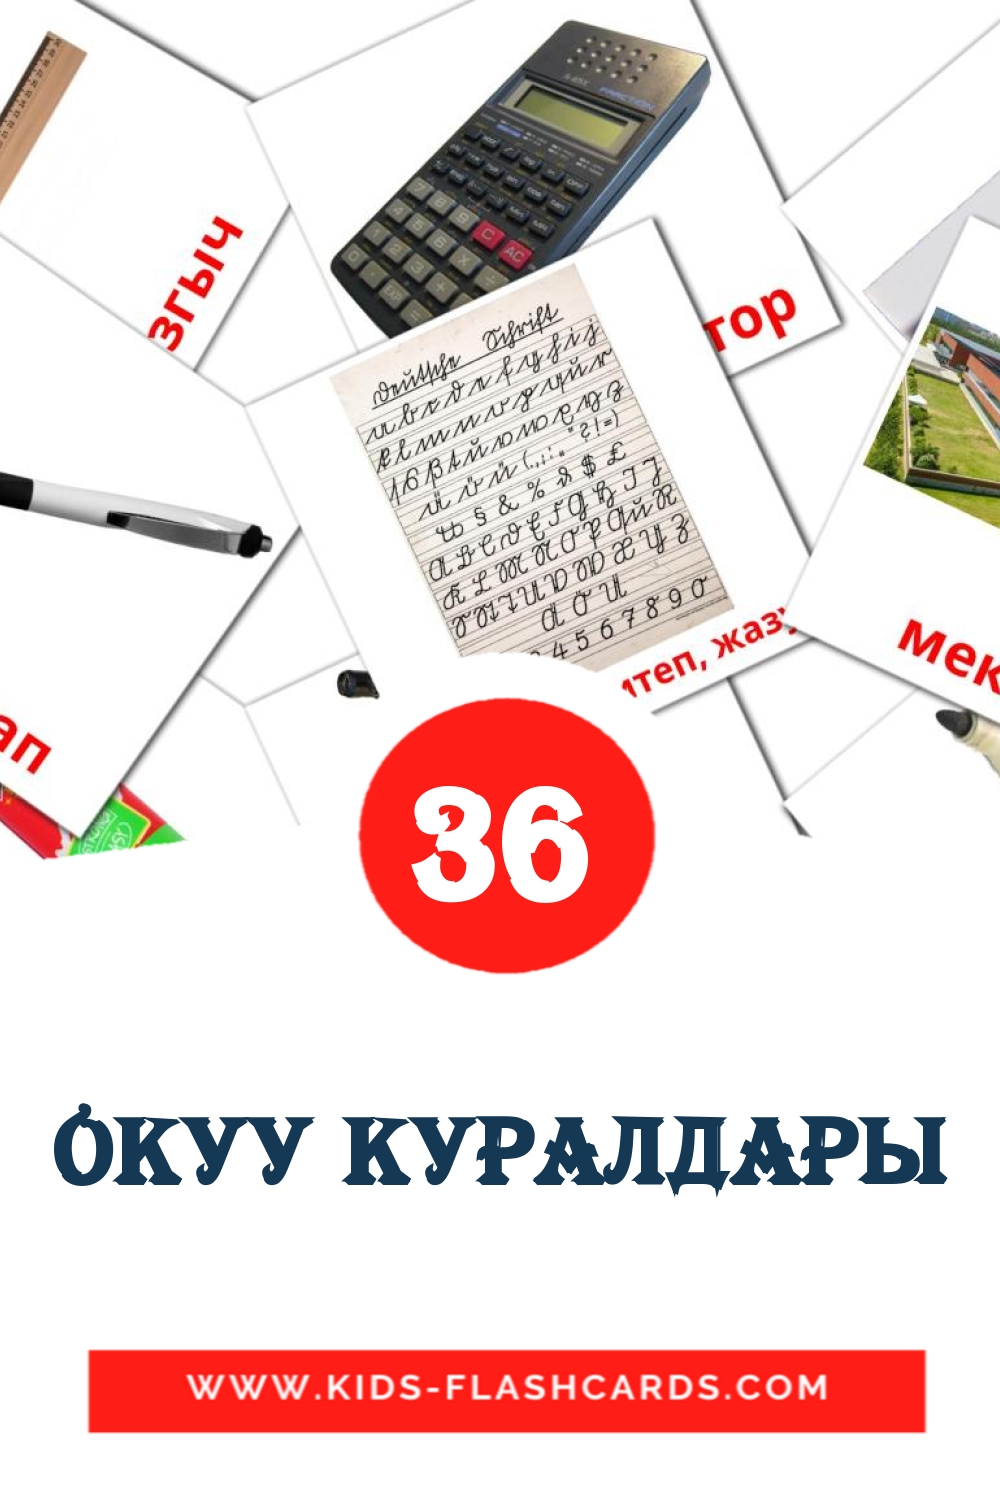 Окуу куралдары на киргизском для Детского Сада (36 карточек)